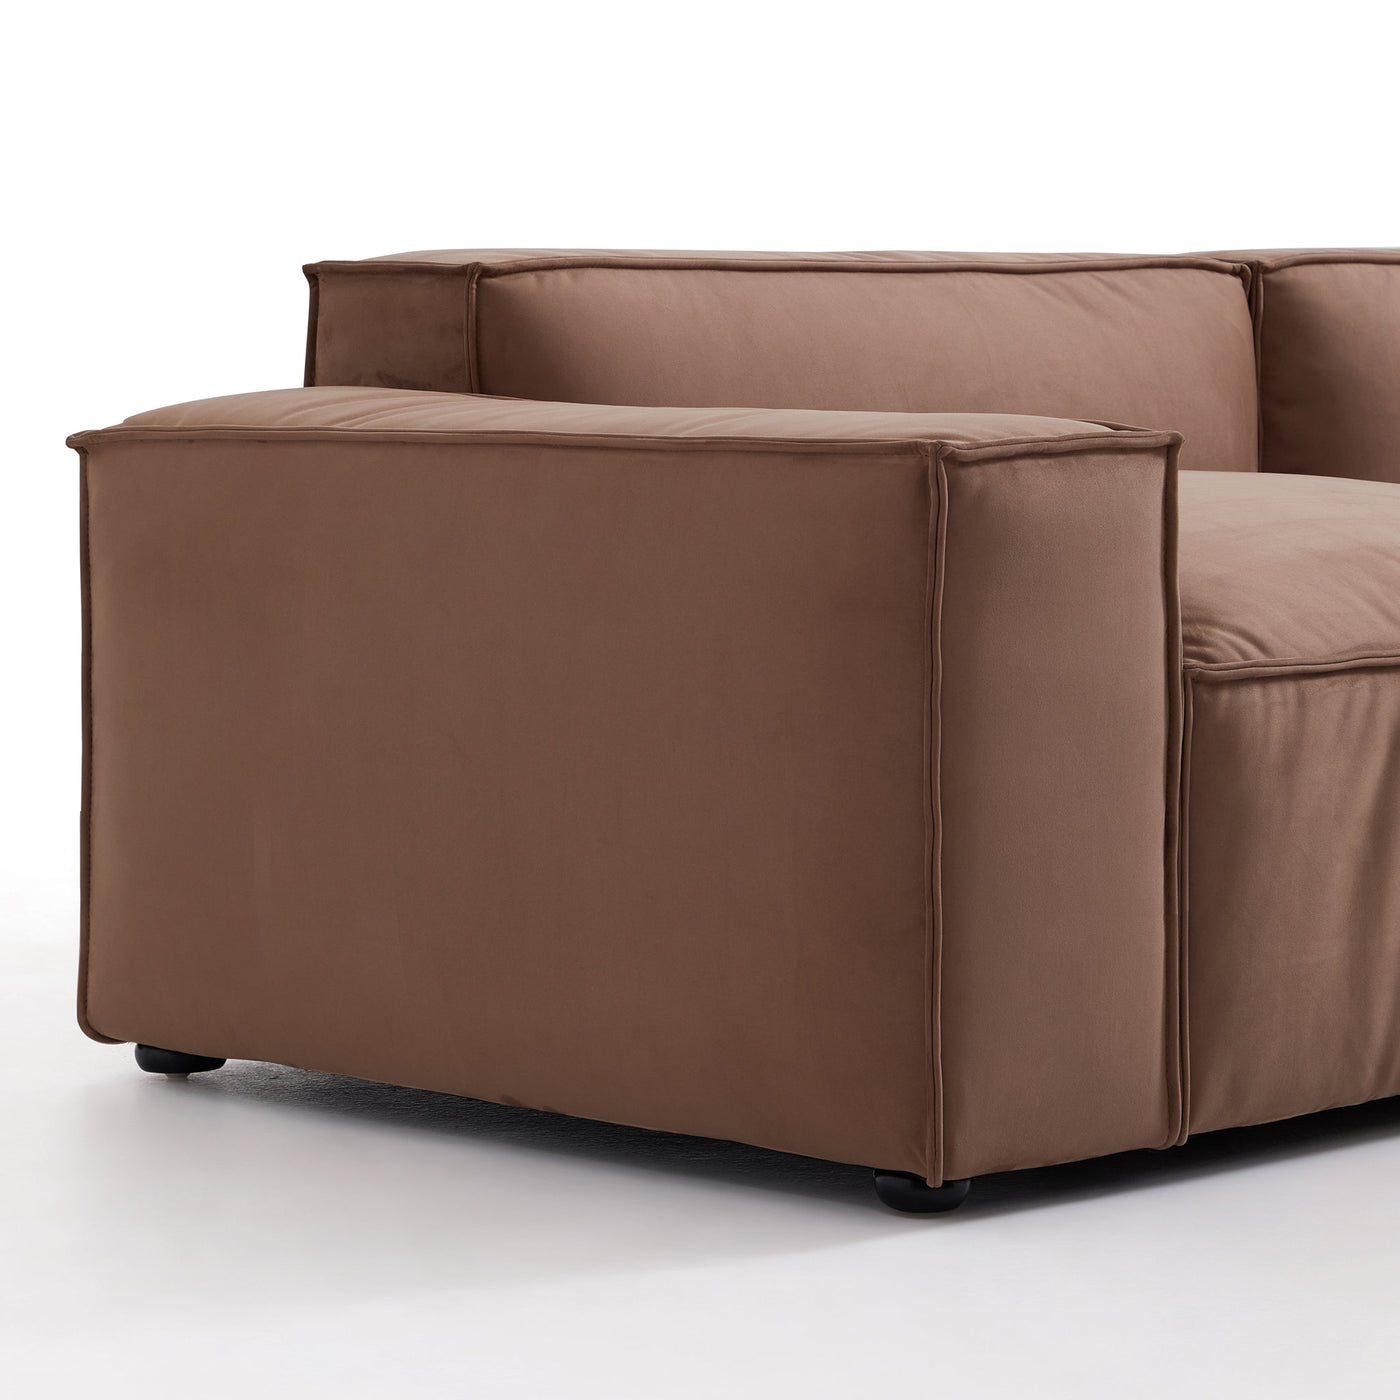 Luxury Minimalist Brown Fabric U Shaped Sectional Sofa-Brown